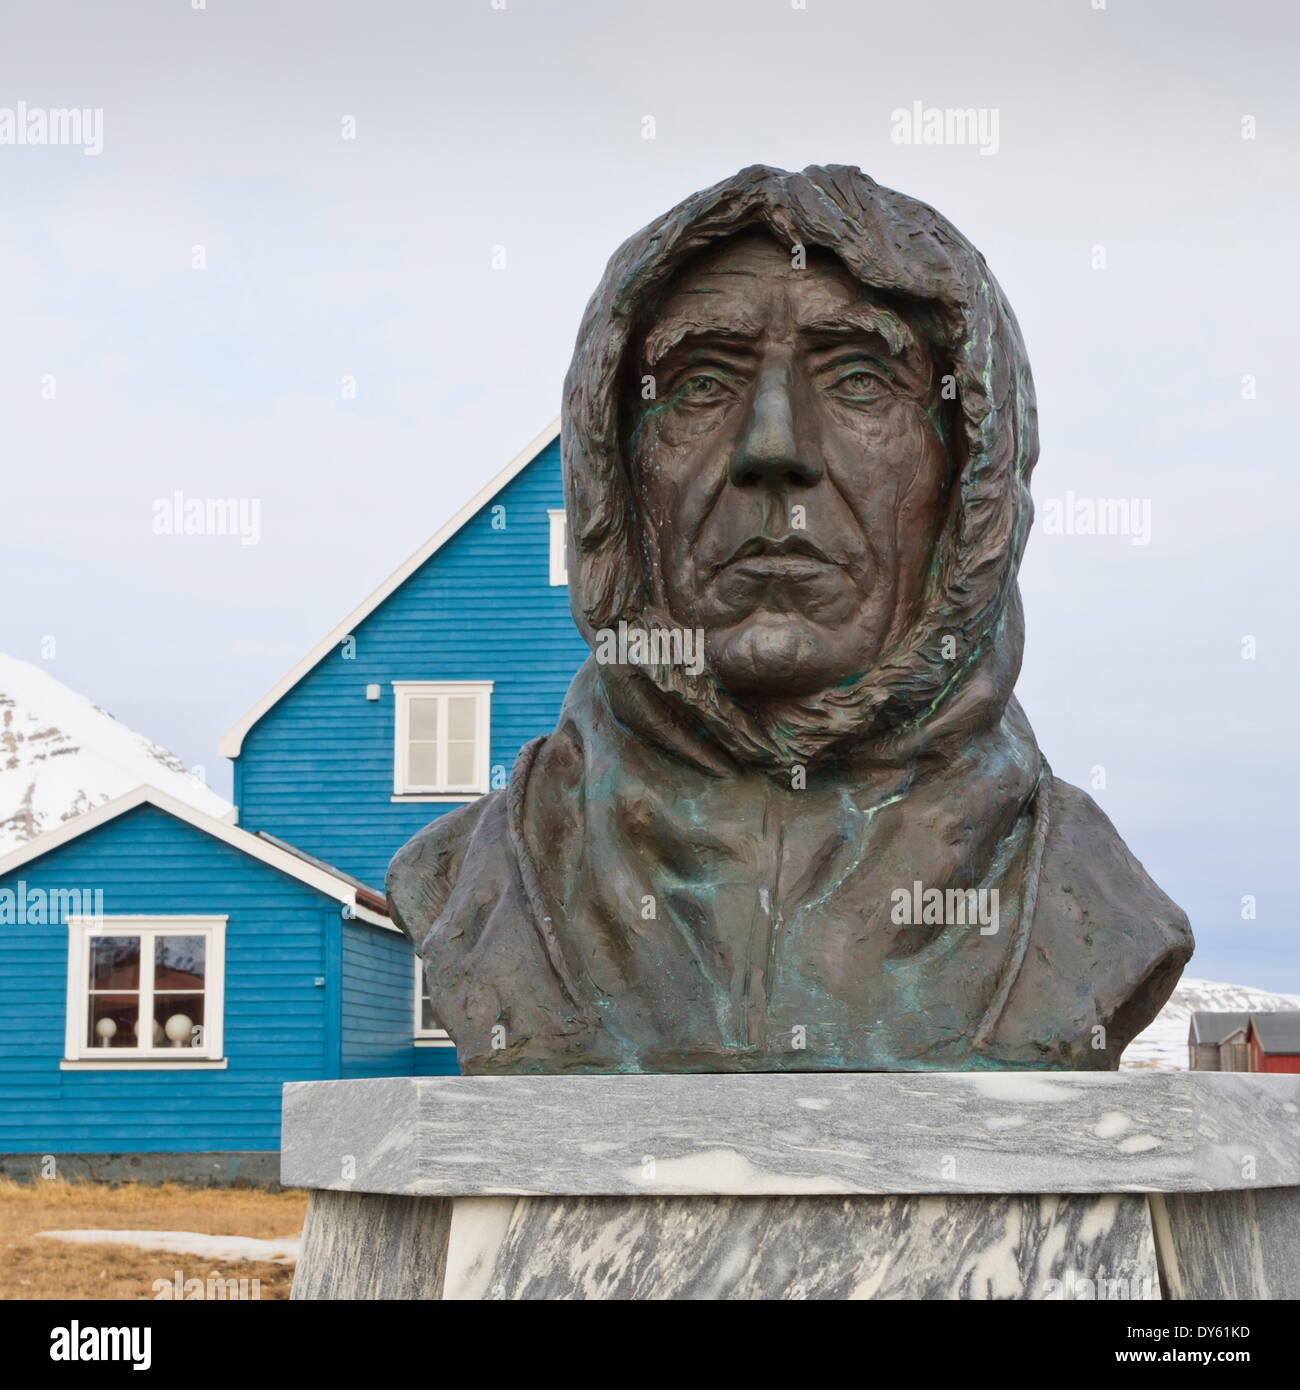 Statue von Roald Amundsen, Ny Alesund, Spitzbergen (Svalbard), Arktis, Norwegen, Skandinavien, Europa Stockfoto